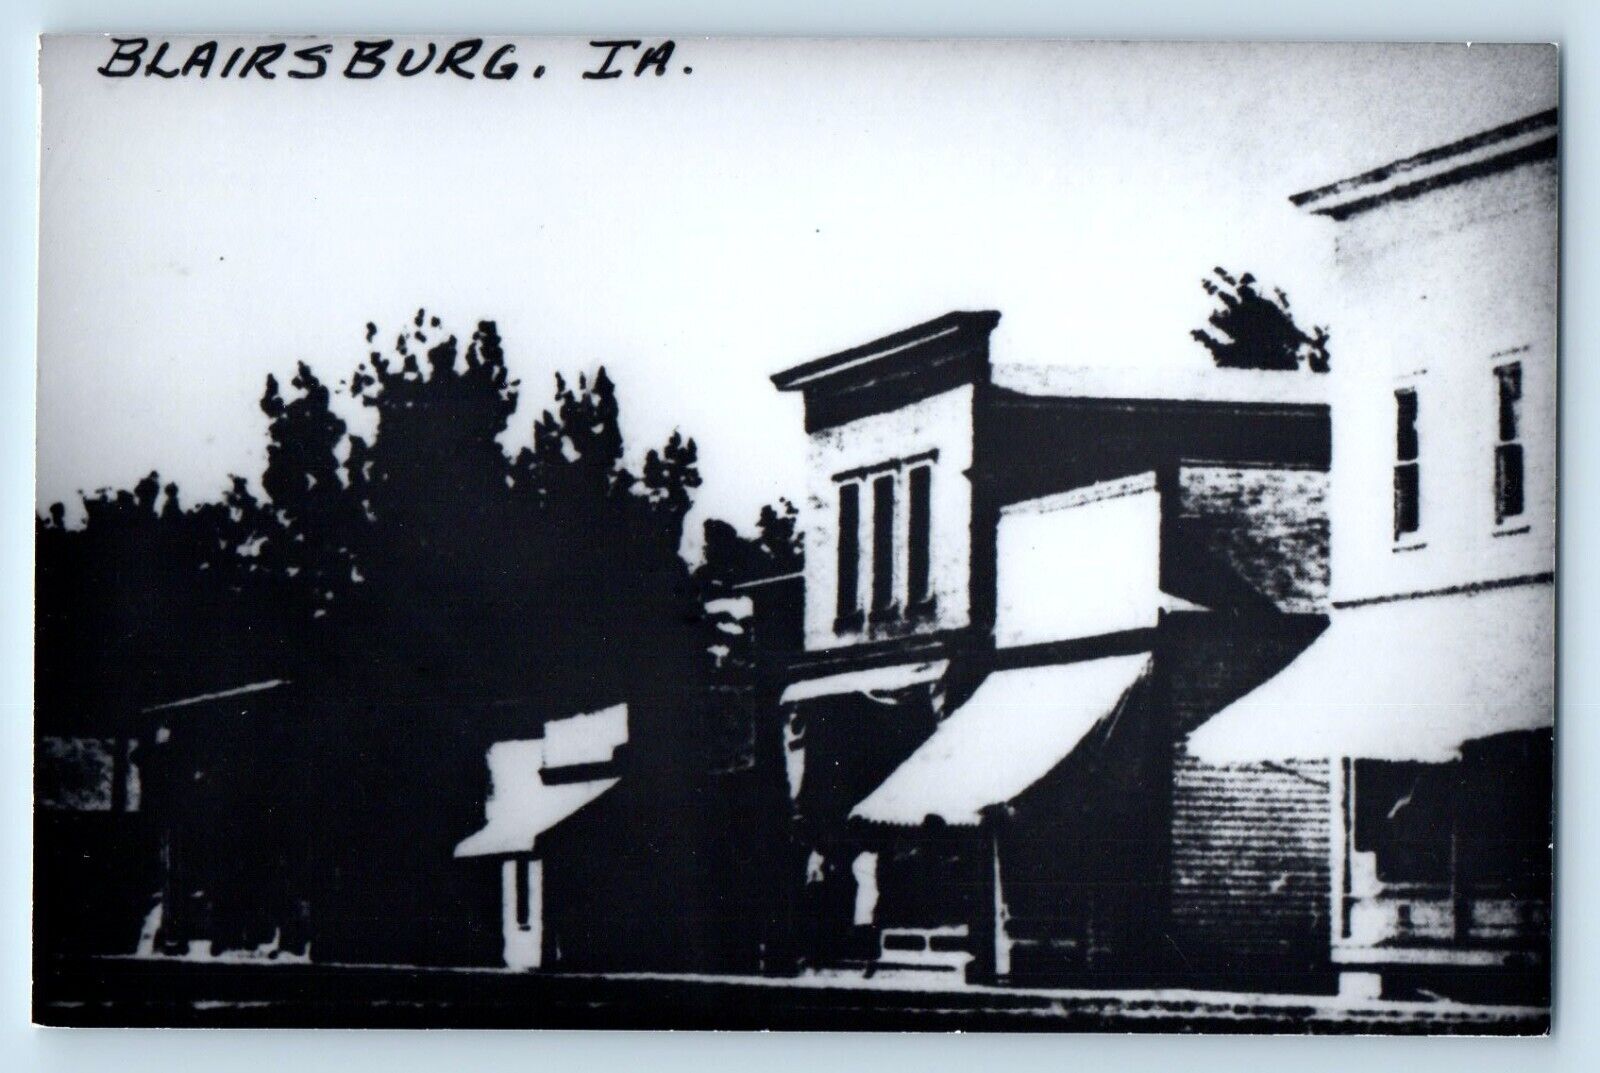 Blairsburg Iowa IA Postcard Business Section Scenic View c1940's Antique Trees